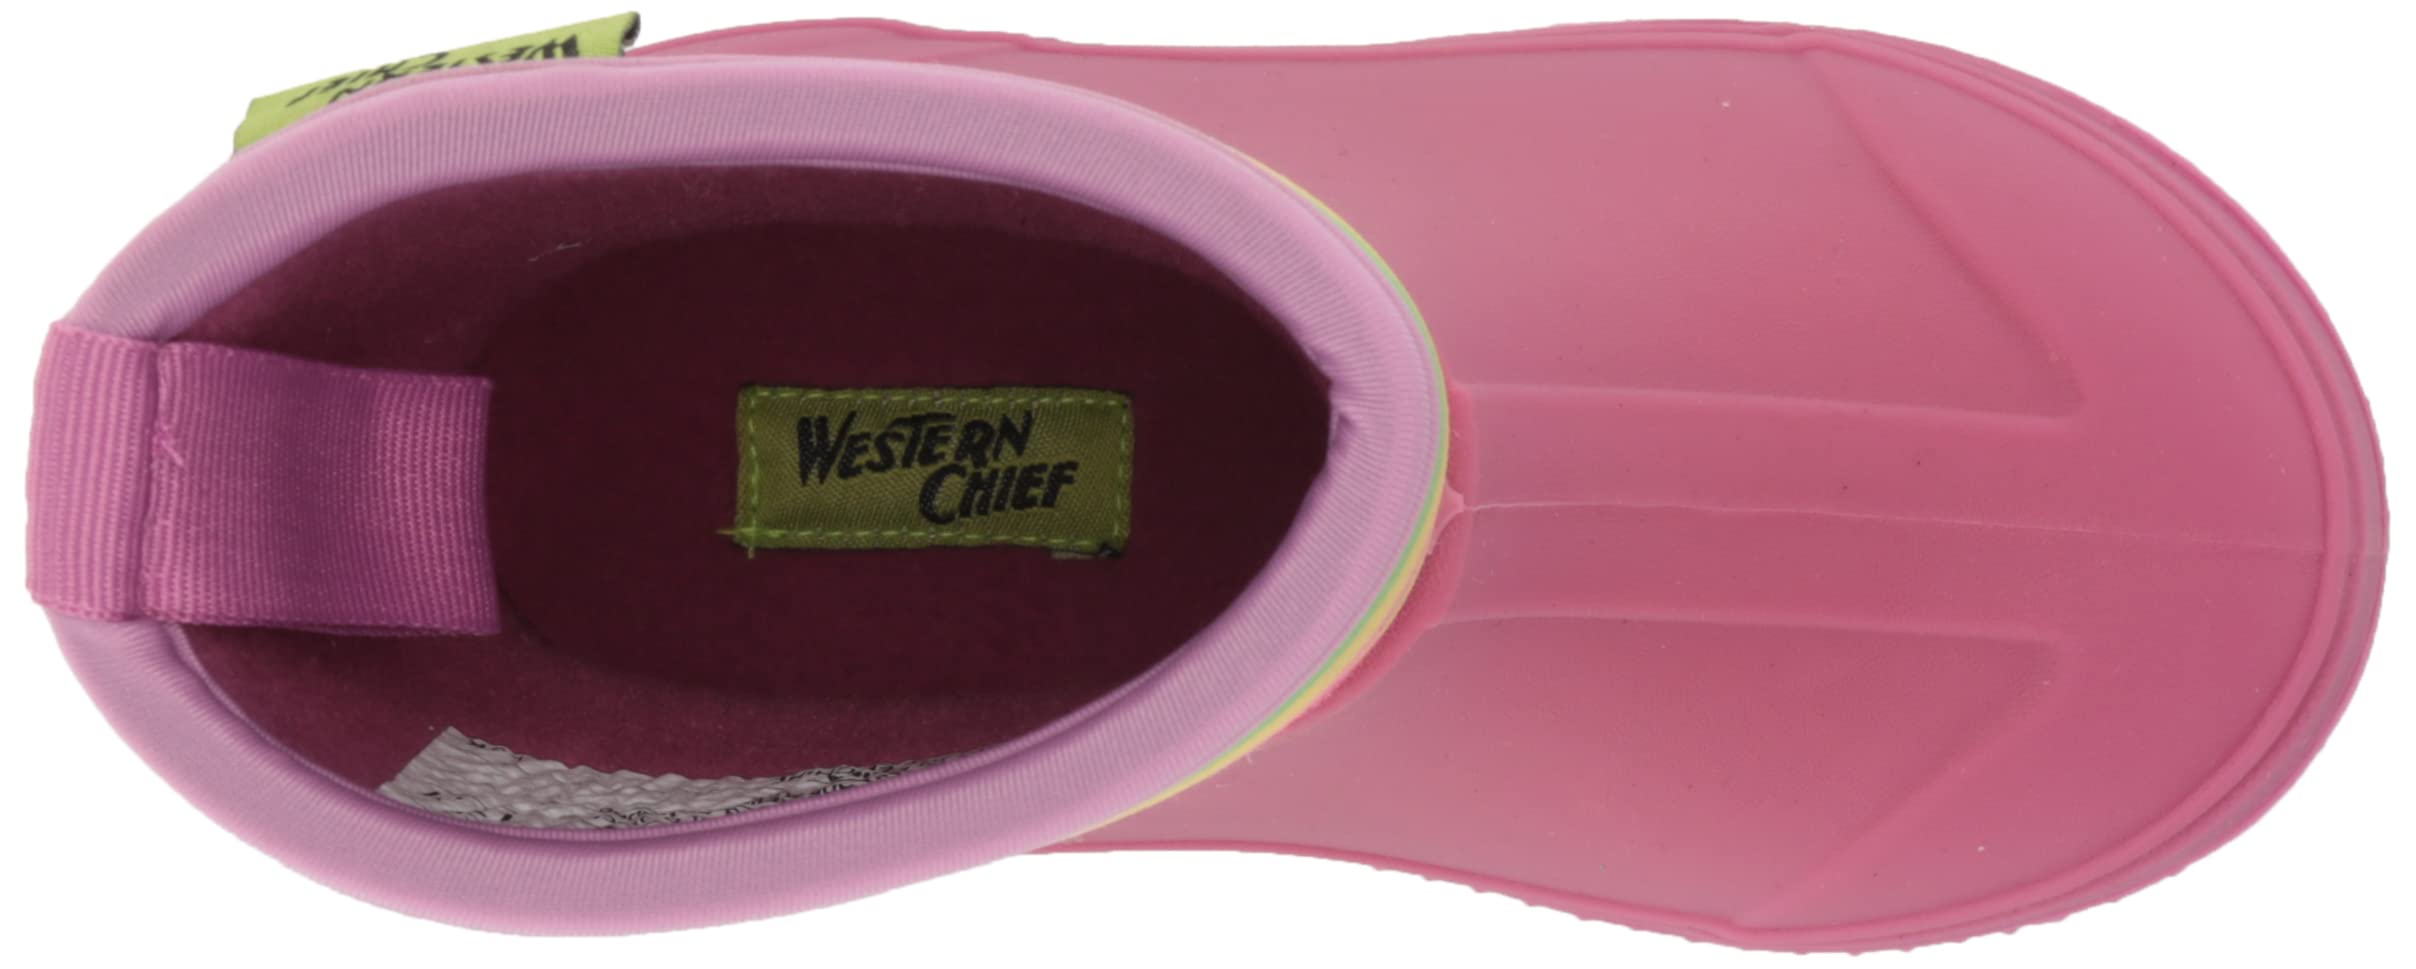 Western Chief Unisex-Child Freestyle Neoprene Boot Snow